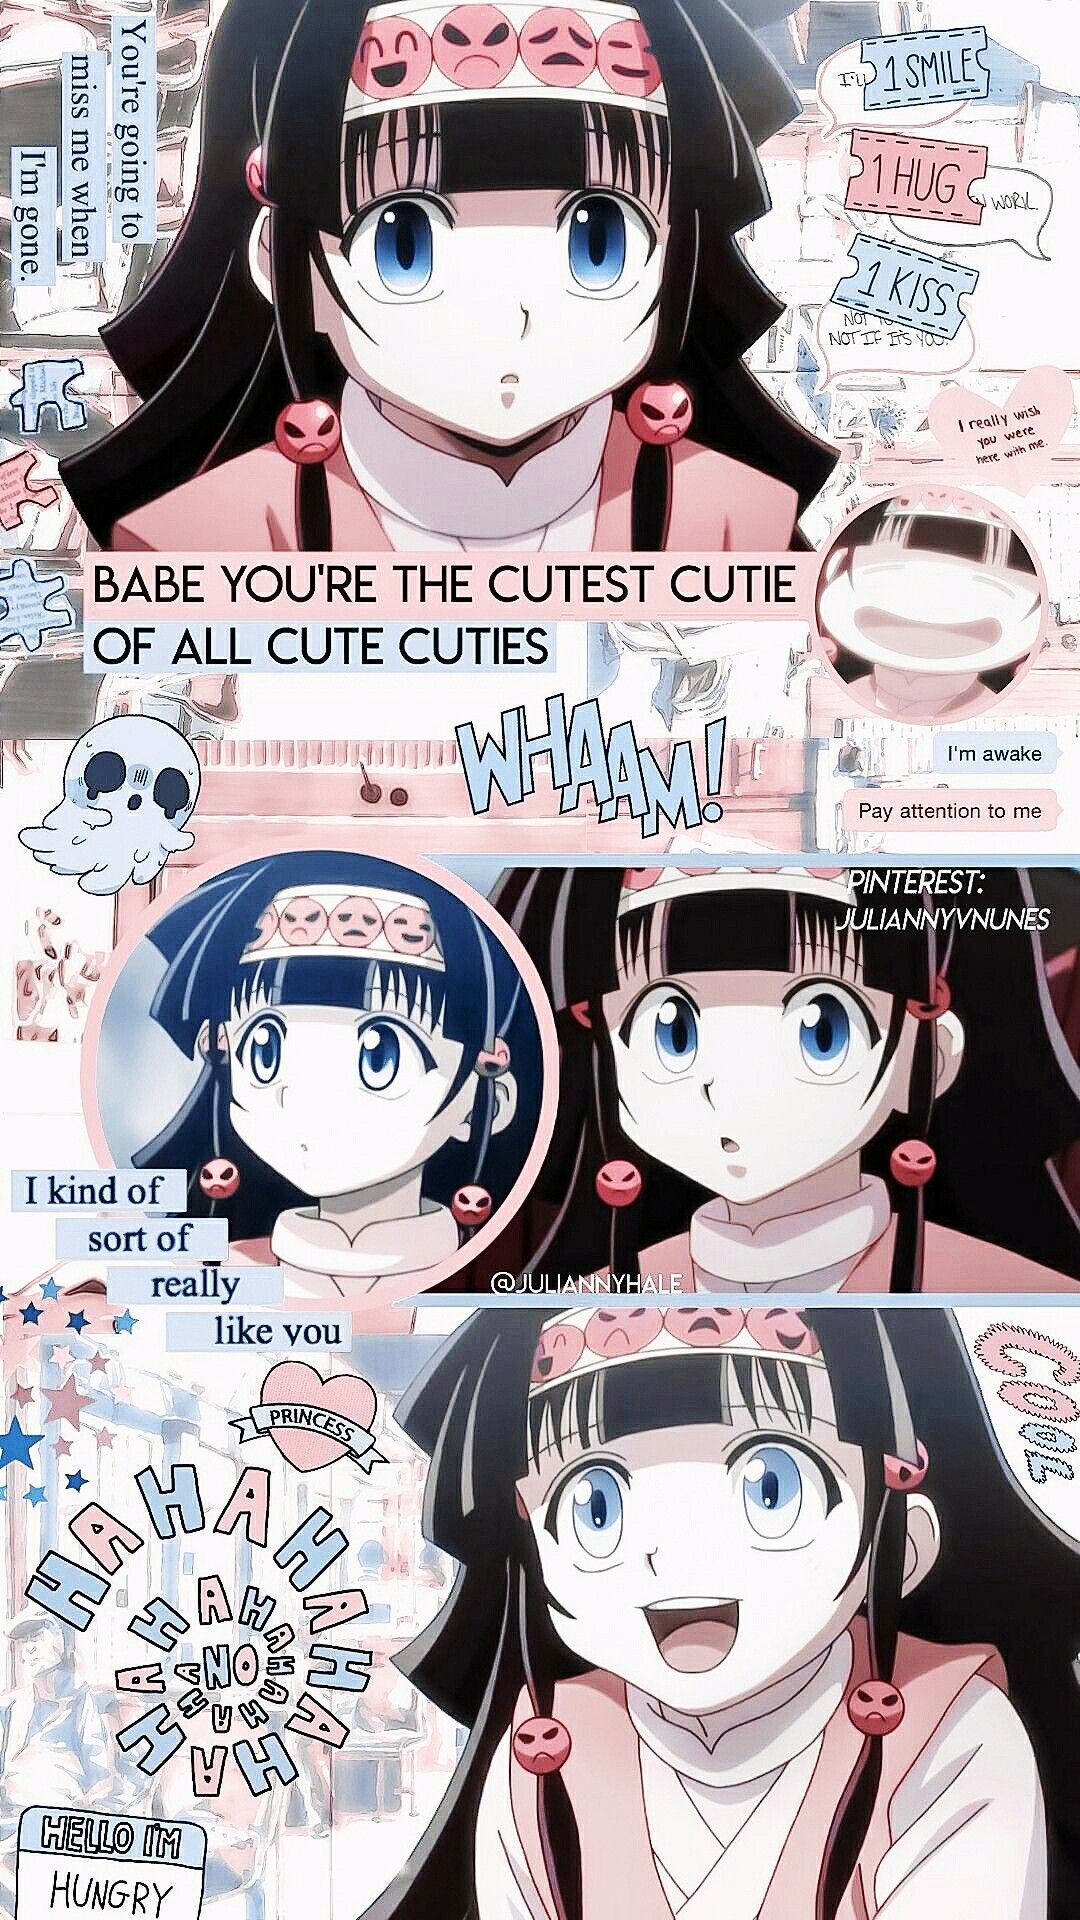 Alluka collage edit. Anime wallpaper iphone, Anime